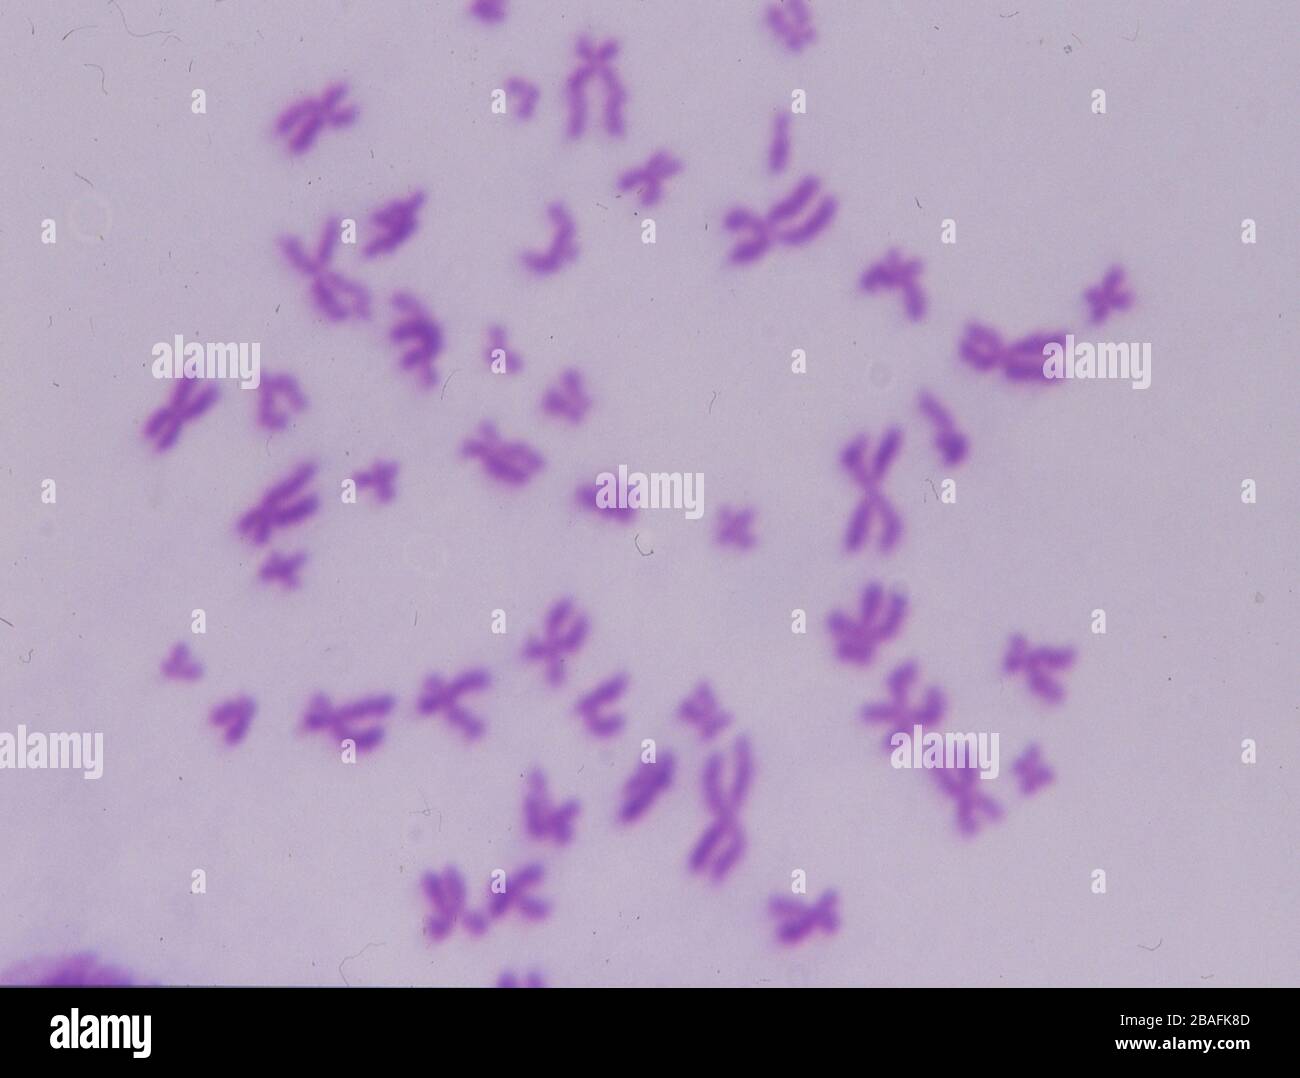 chromosomes of humans Stock Photo